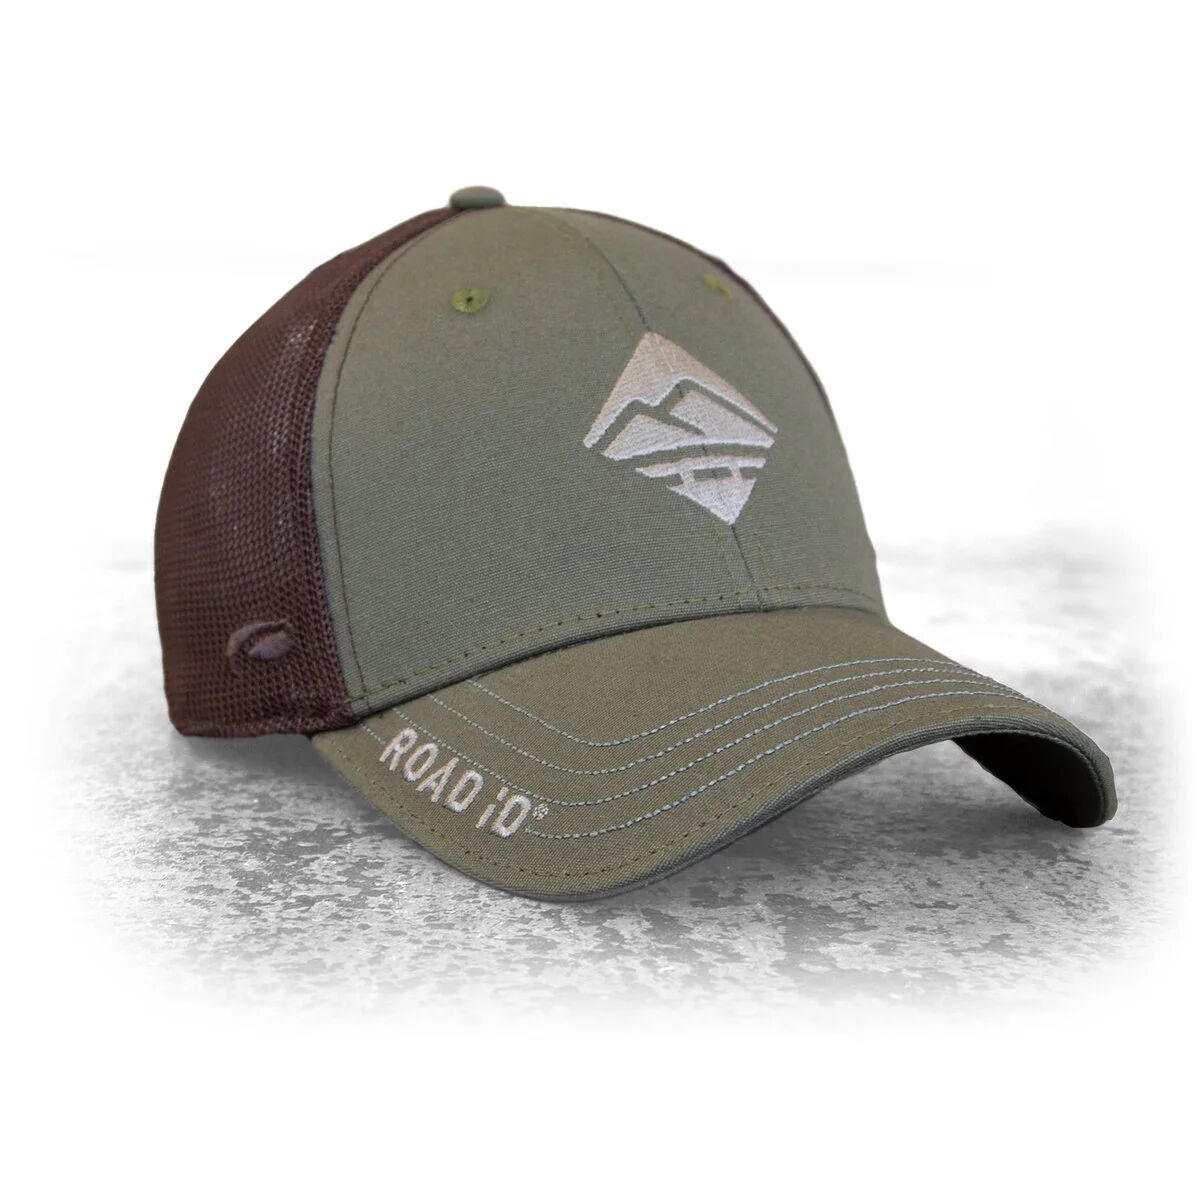 RoadId Trucker Hat Accessory